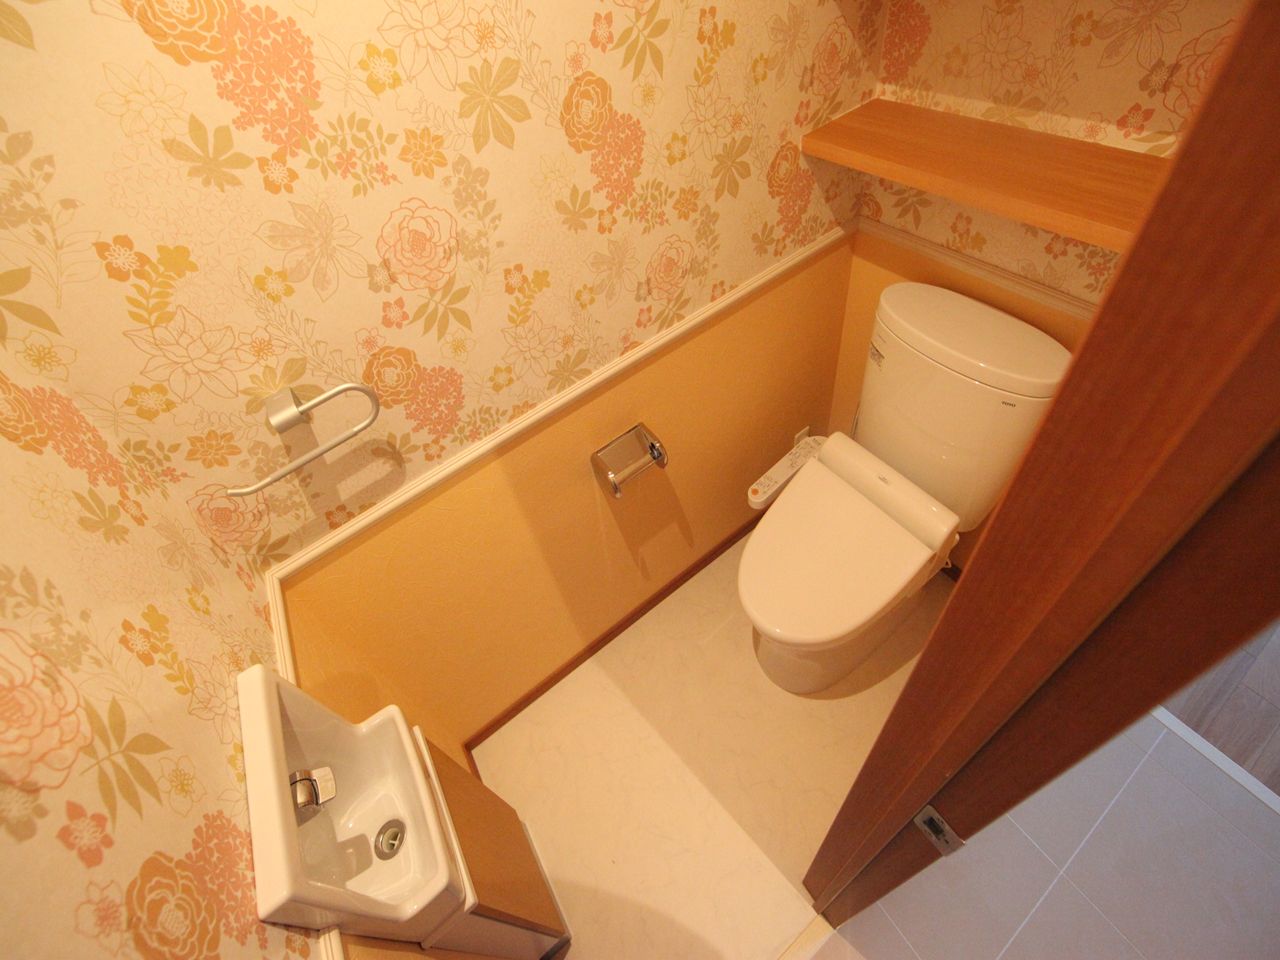 Toilet. bus ・ Restroom Warm water washing heating toilet seat